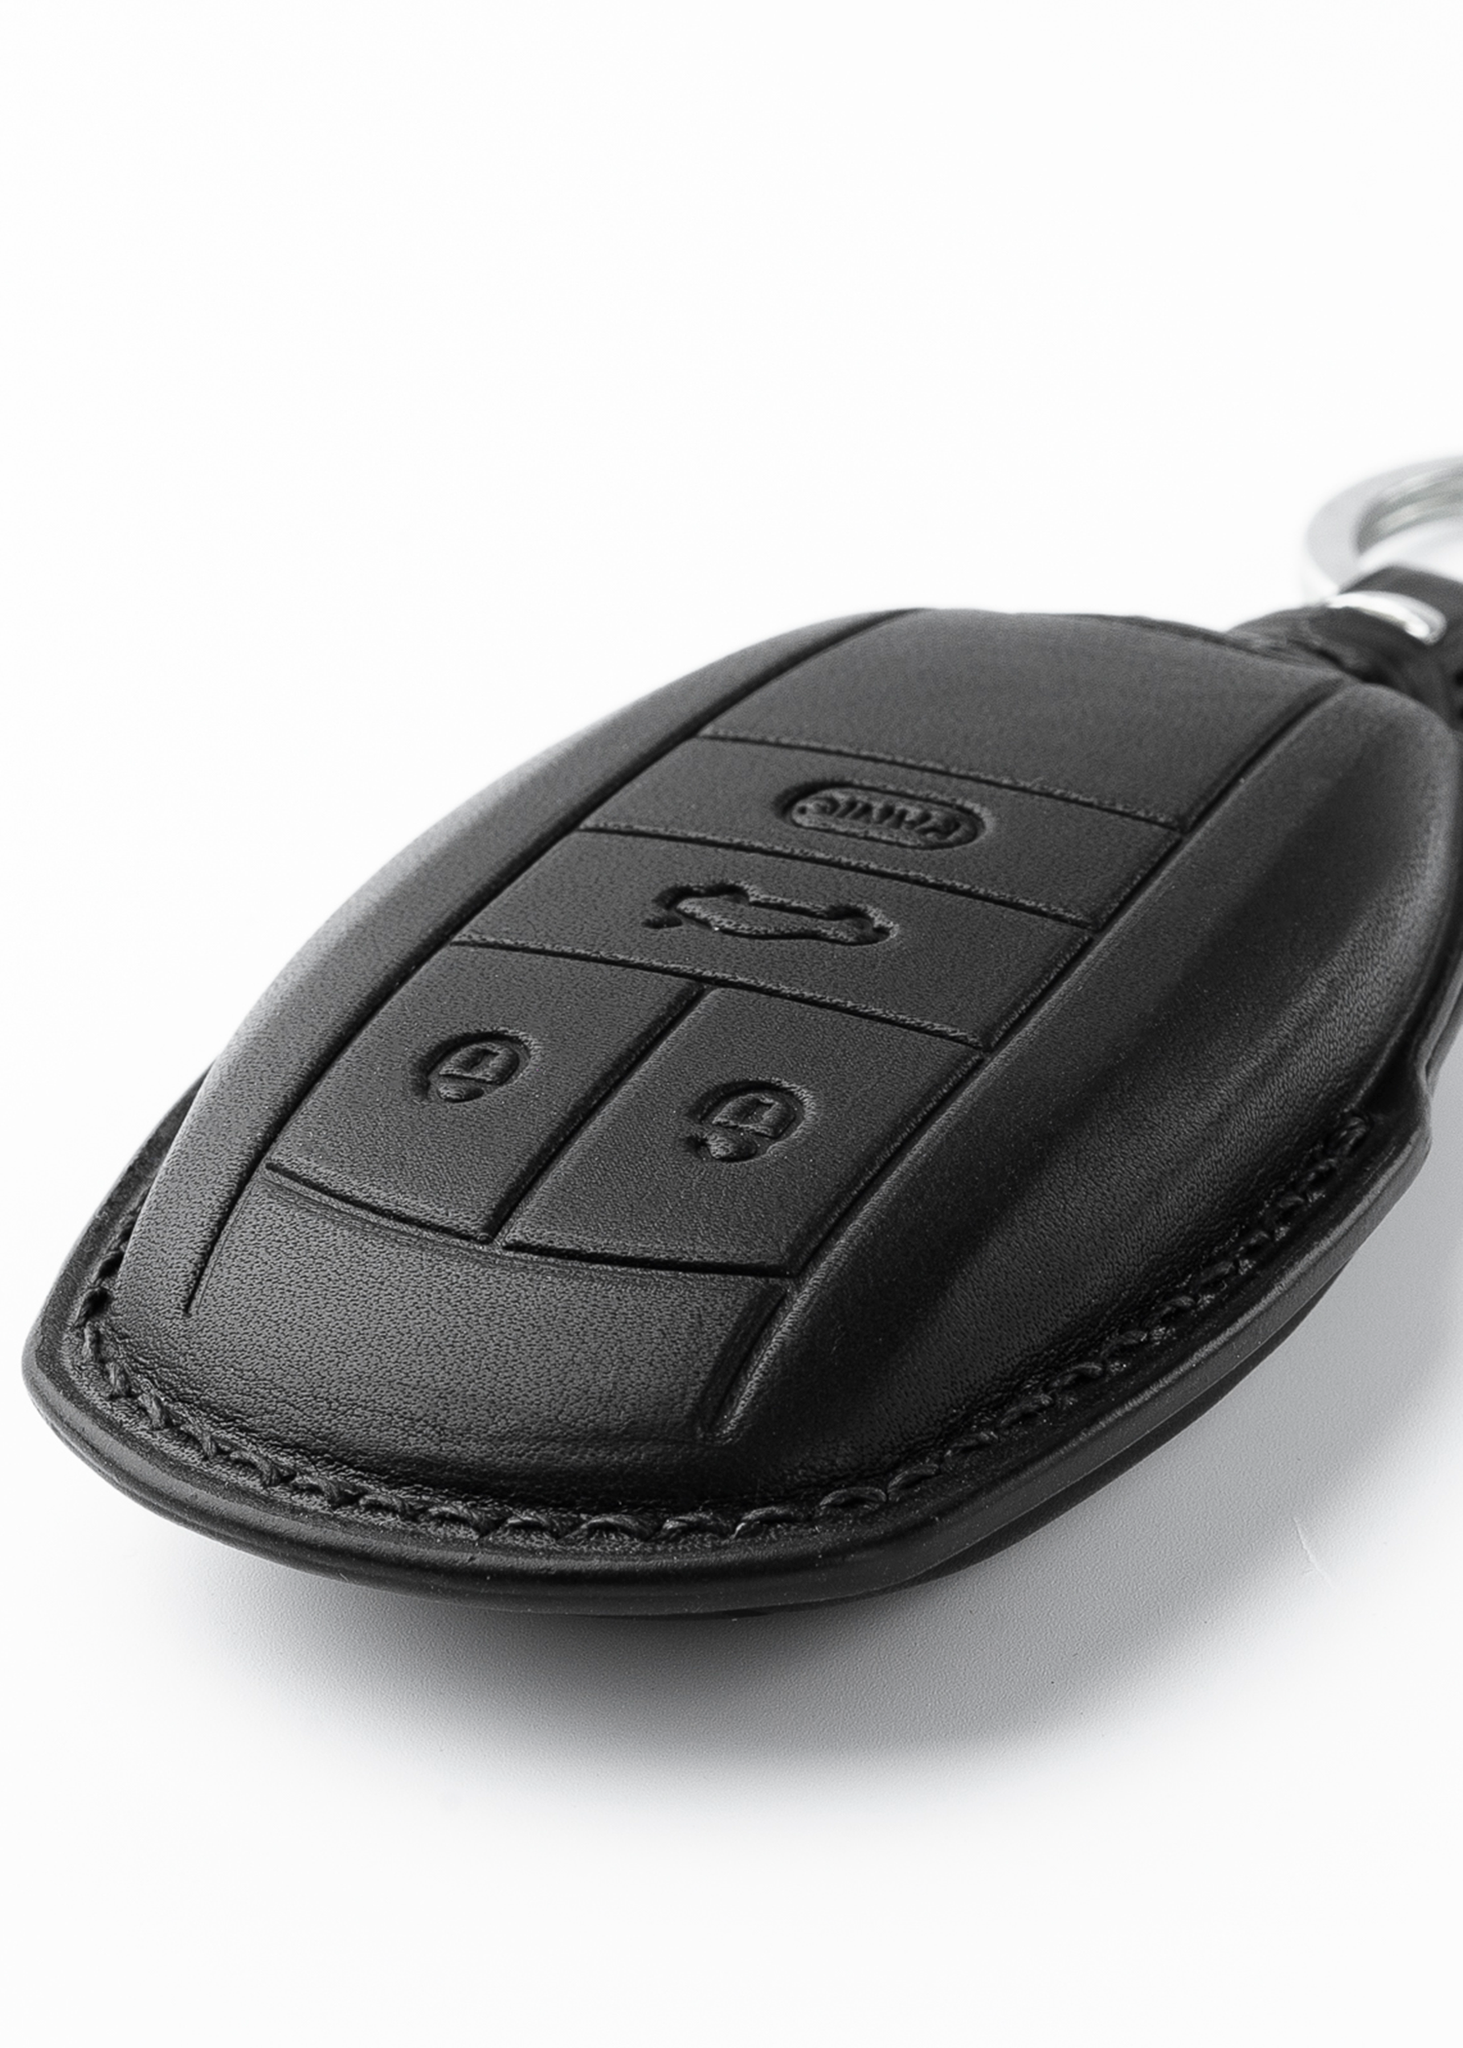 Car Key Case - Small – The Bentley Collection